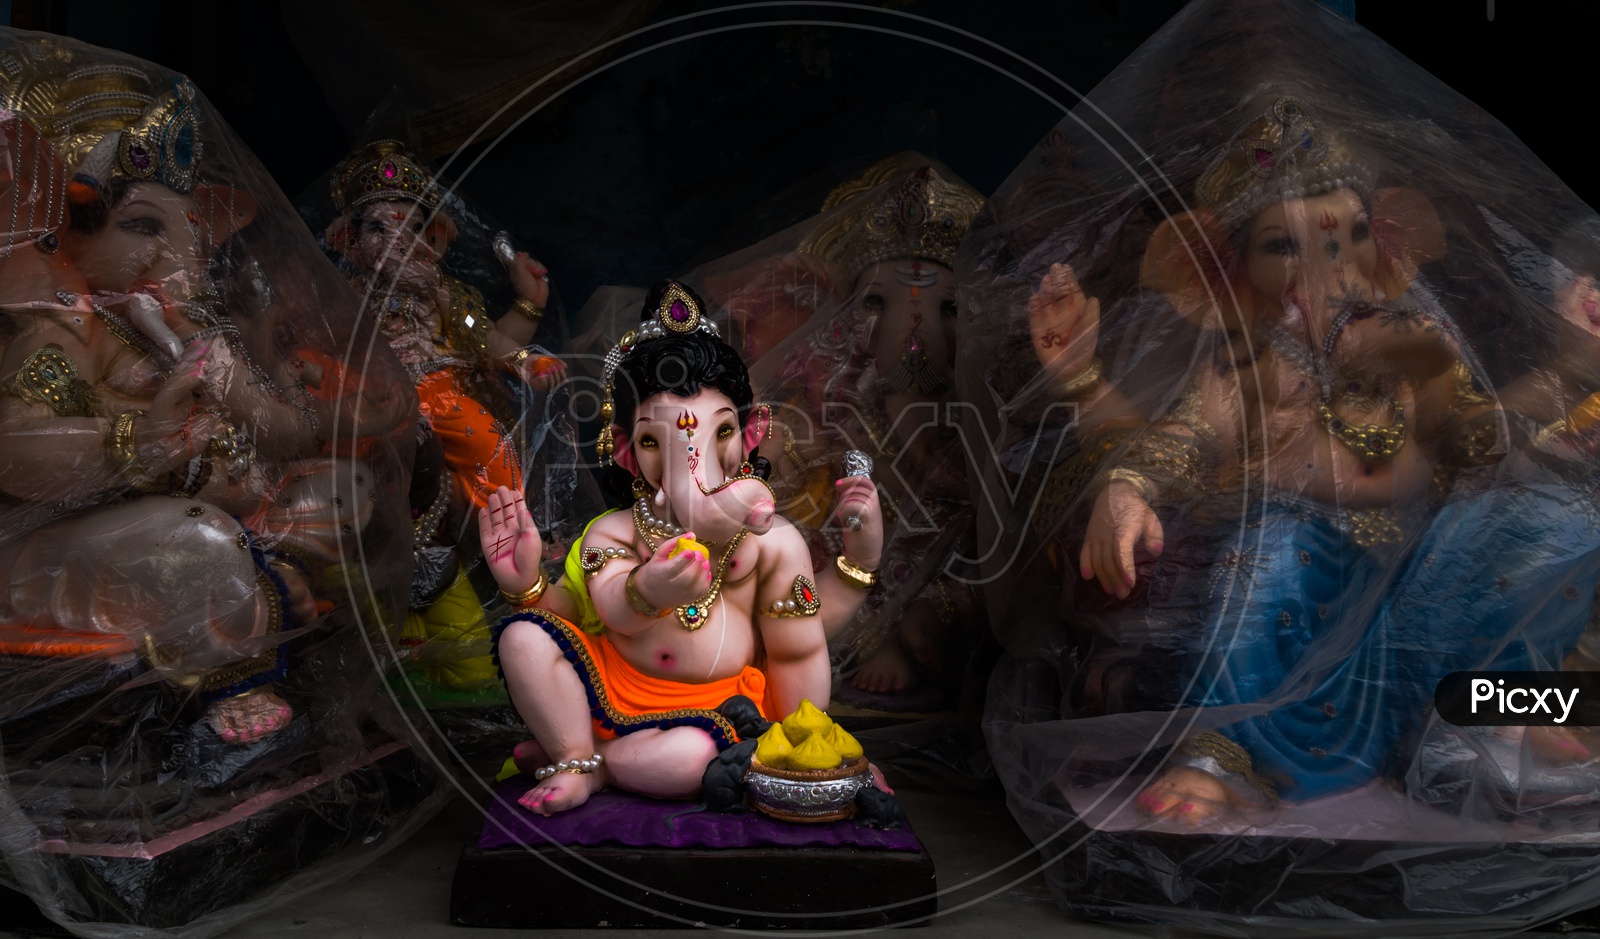 Lord Ganesha's idols for sale at market